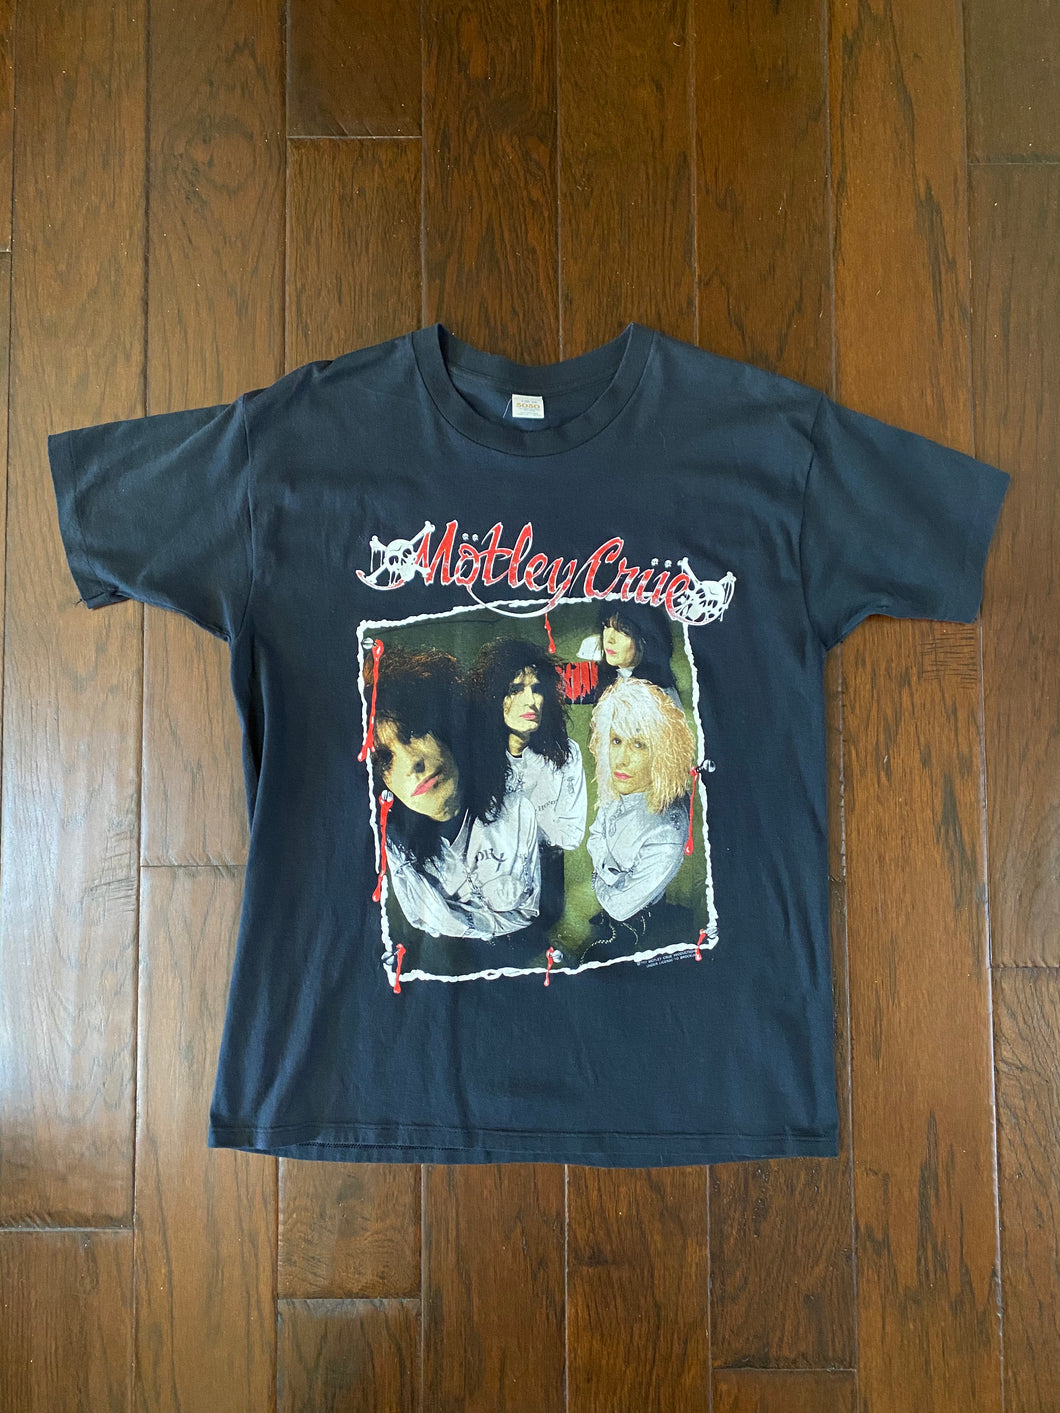 Motley Crue 1989 “Dr Feelgood” Vintage Tour T-shirt